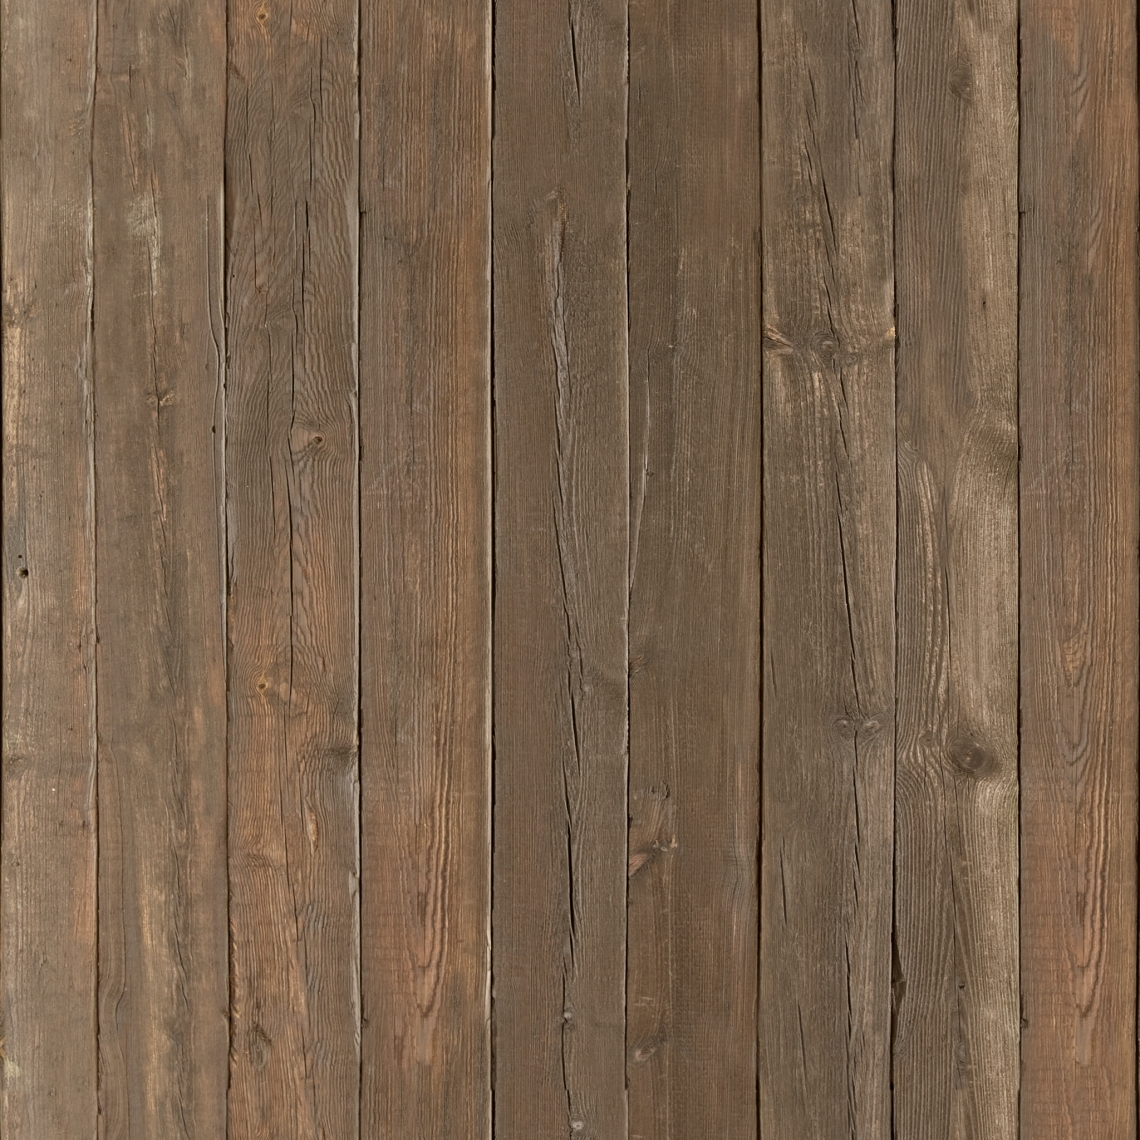 tileable wood plank texture